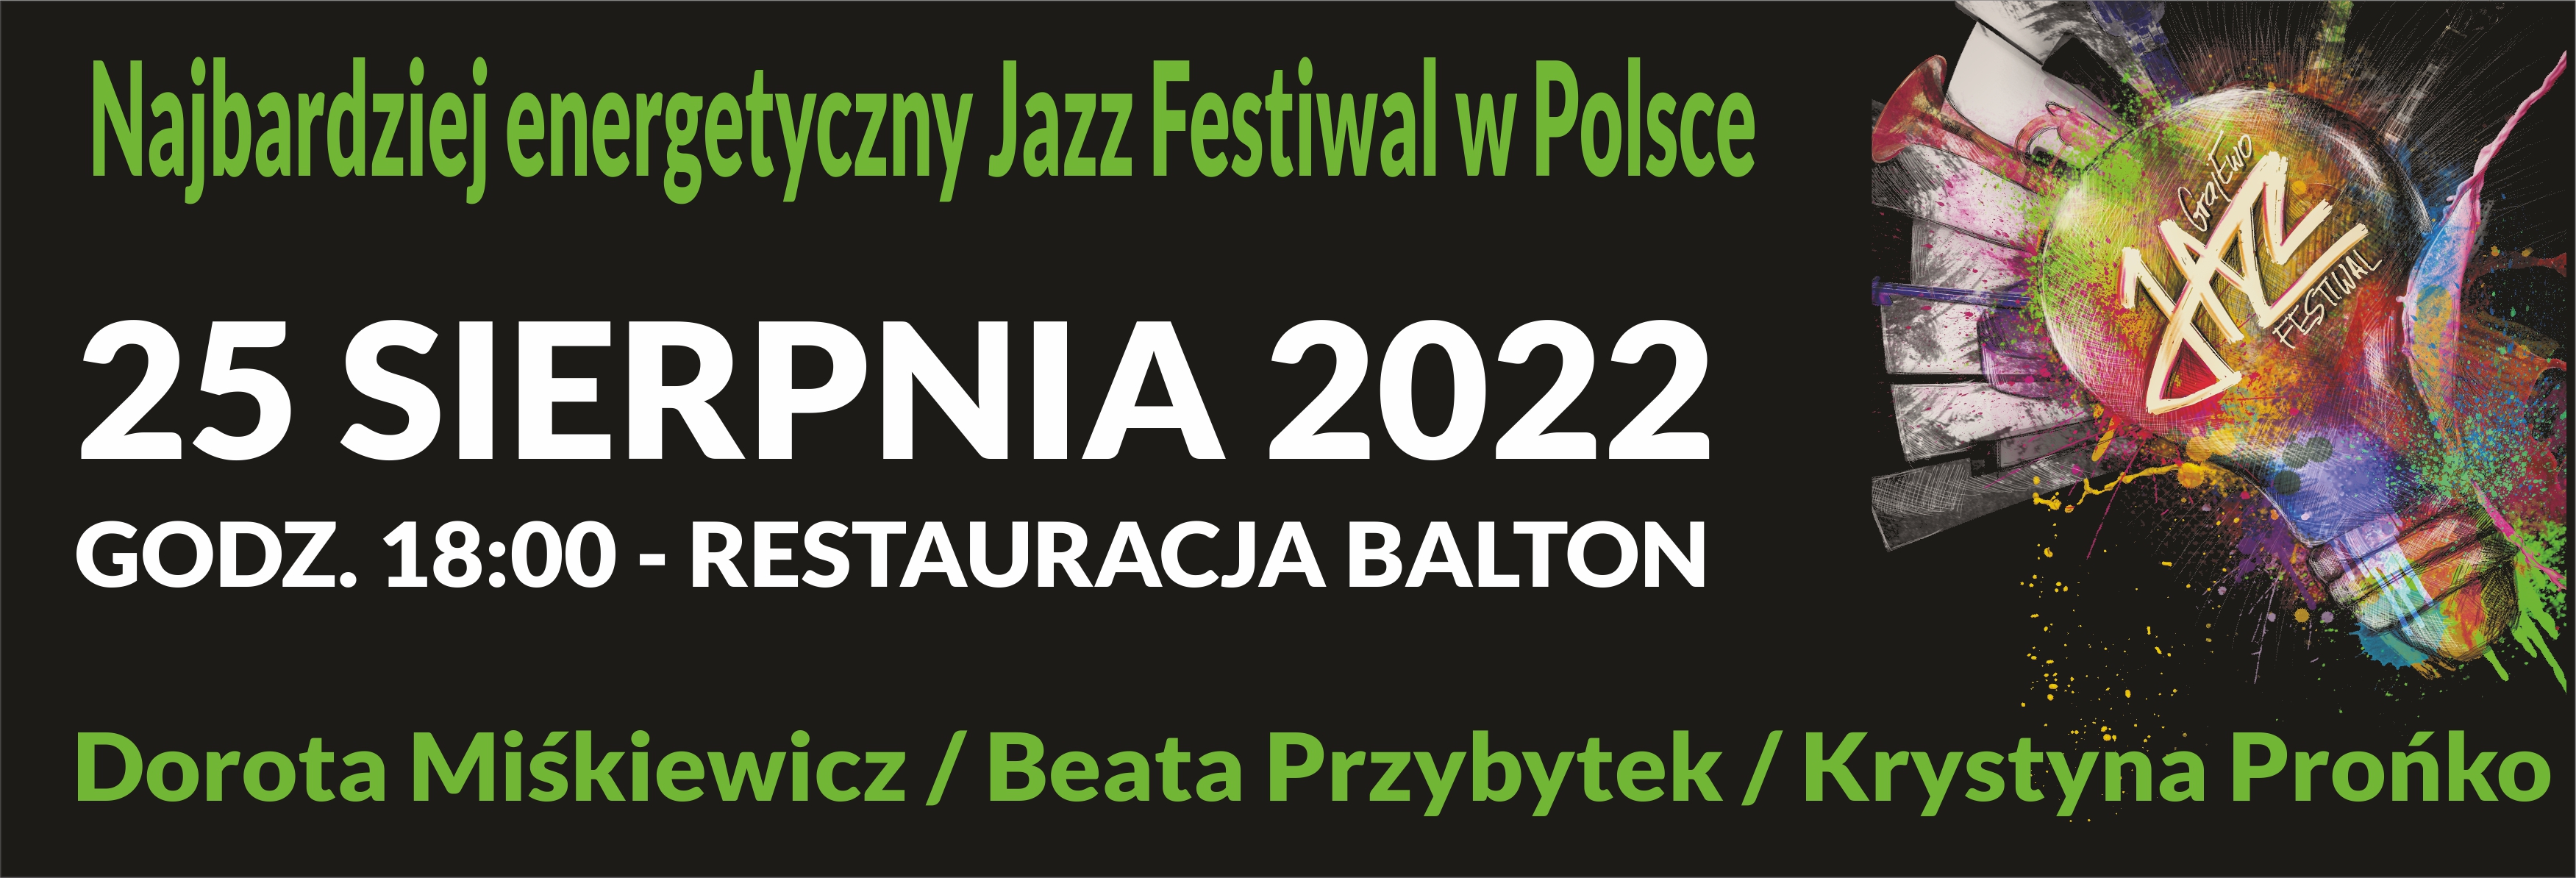 GrajEwo Jazz Festiwal